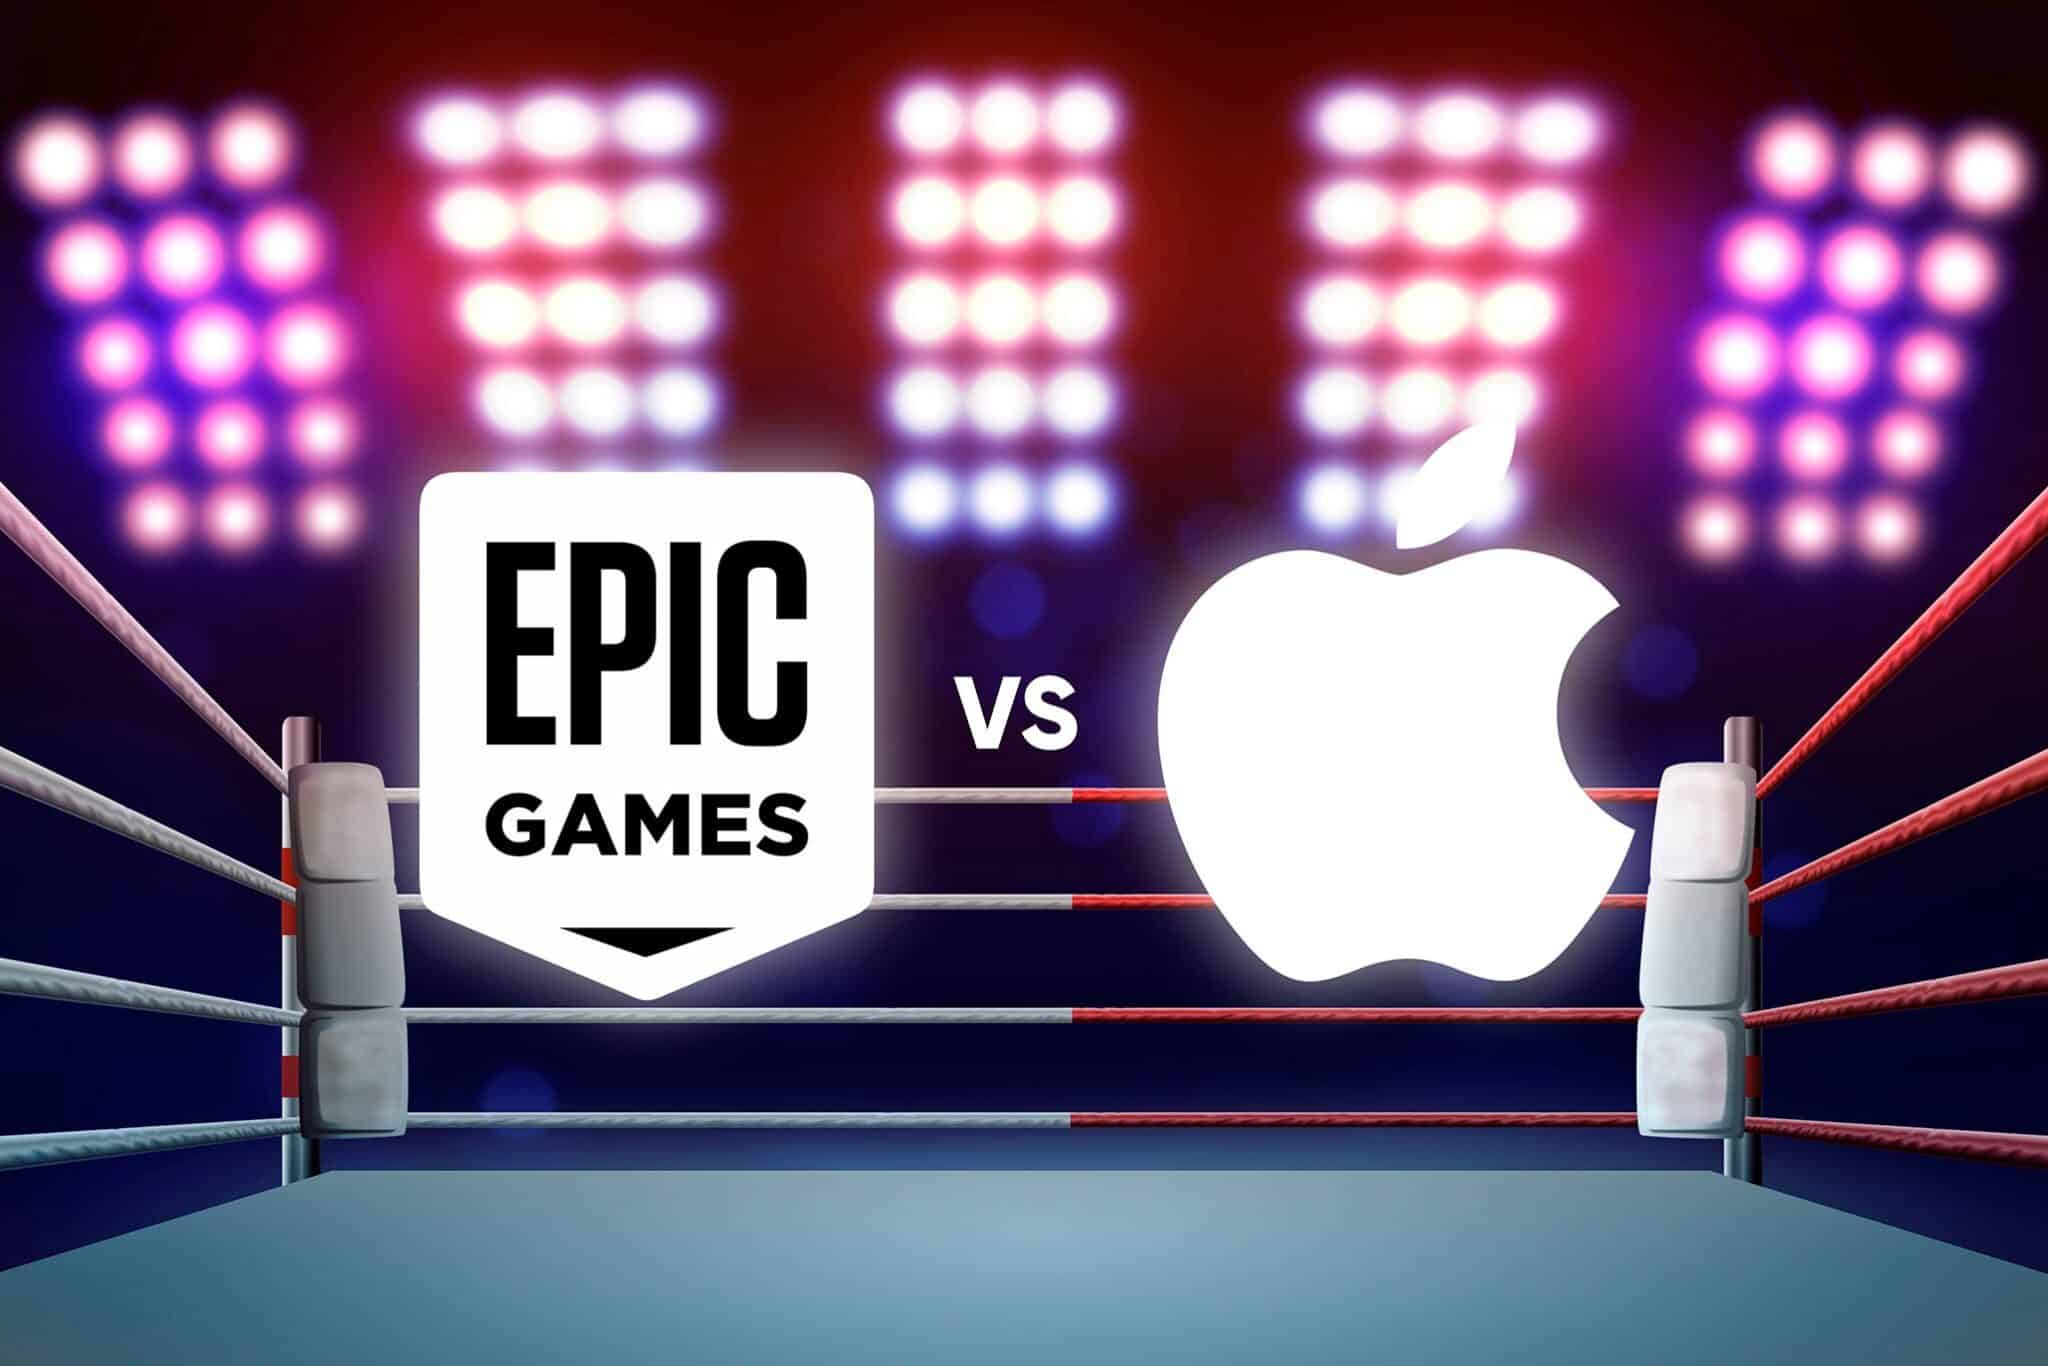 apple vs epic games update